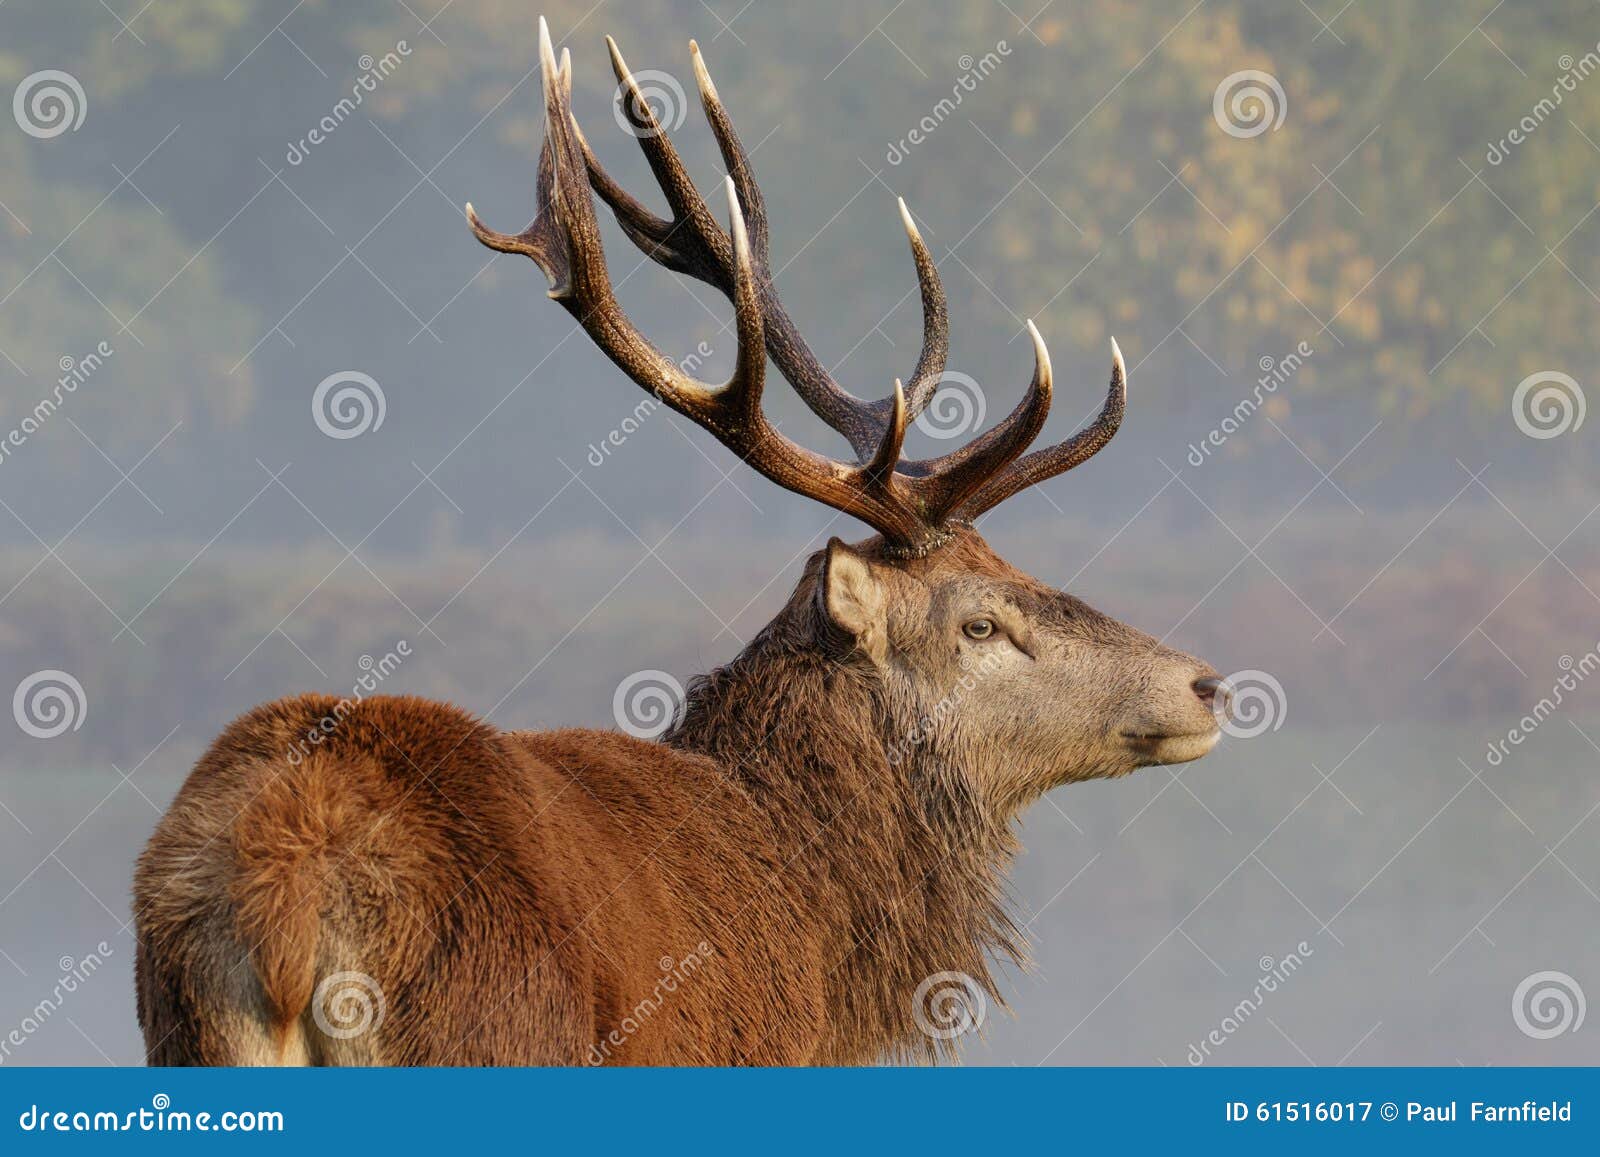 red deer stag portrait